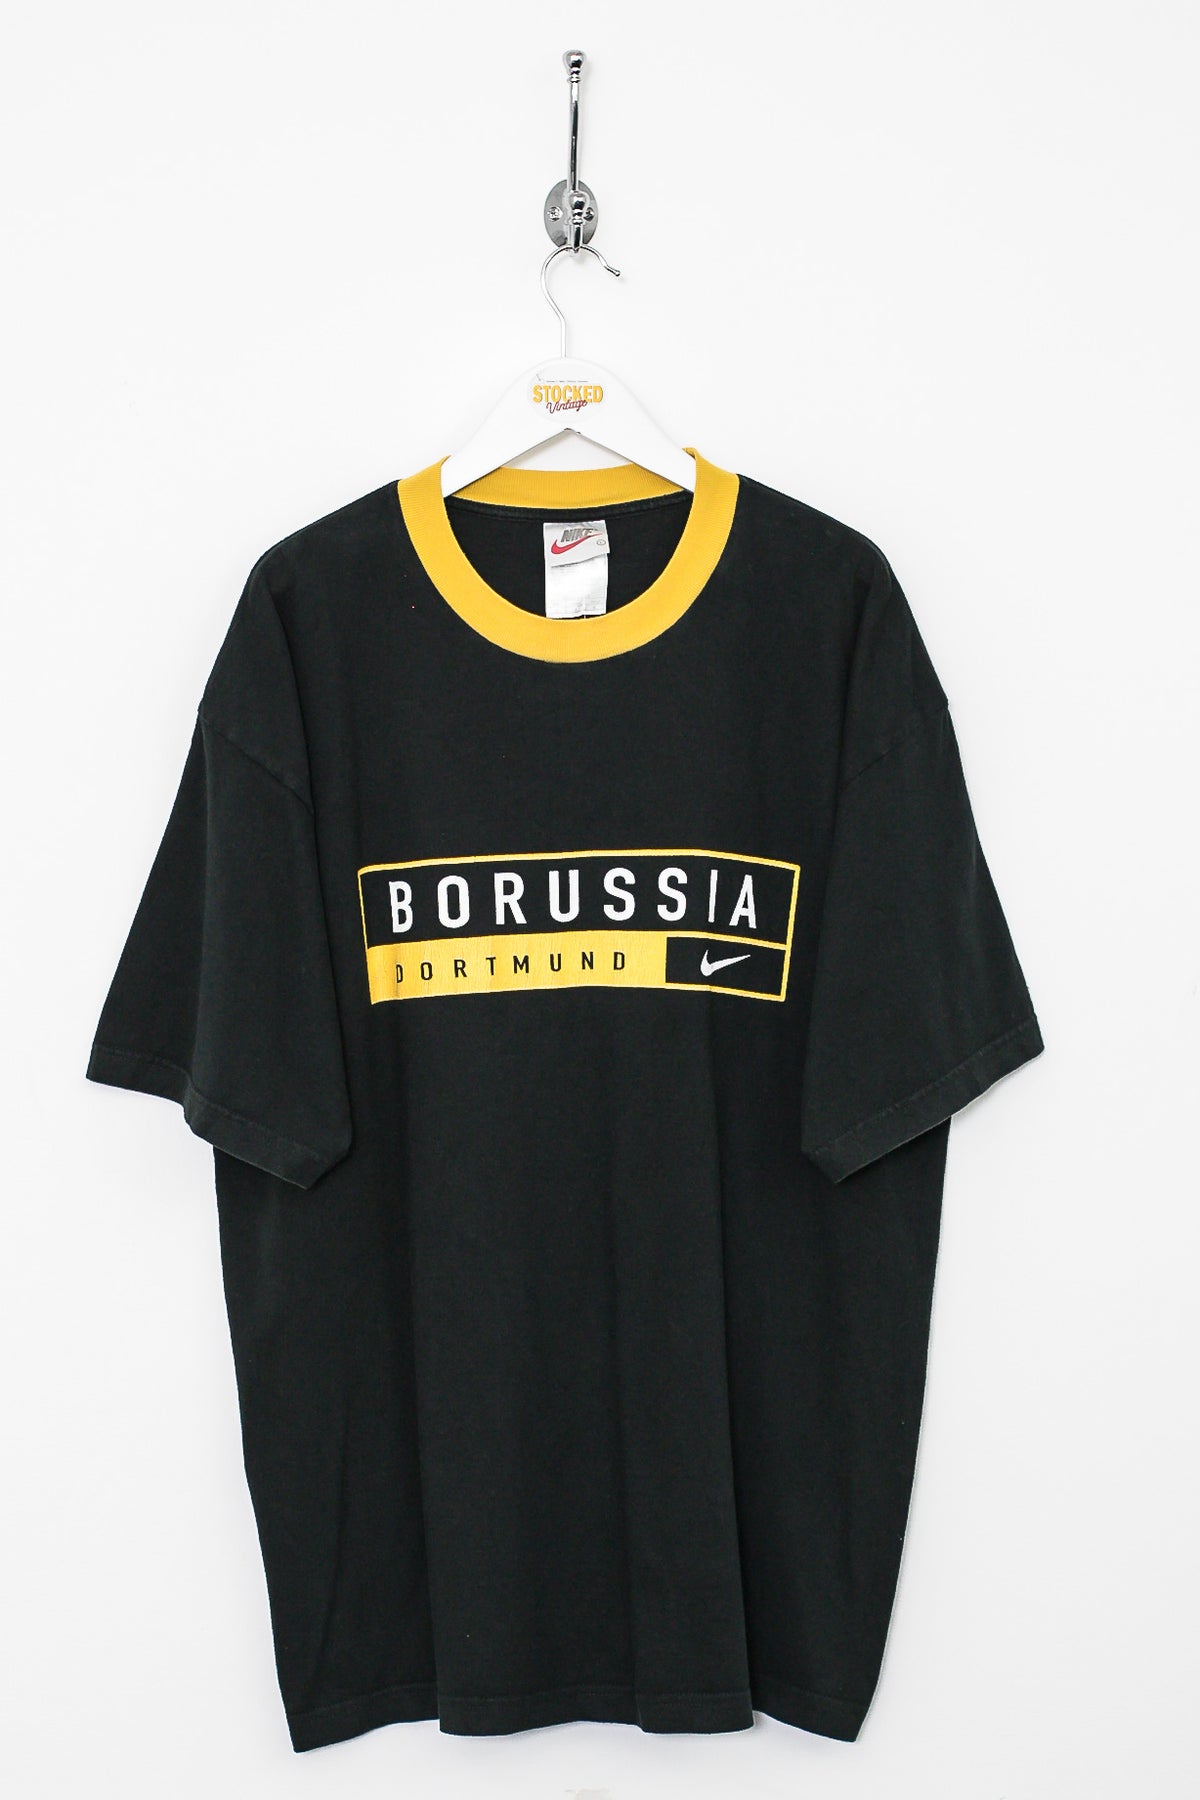 90s Nike Borussia Dortmund Tee (L)